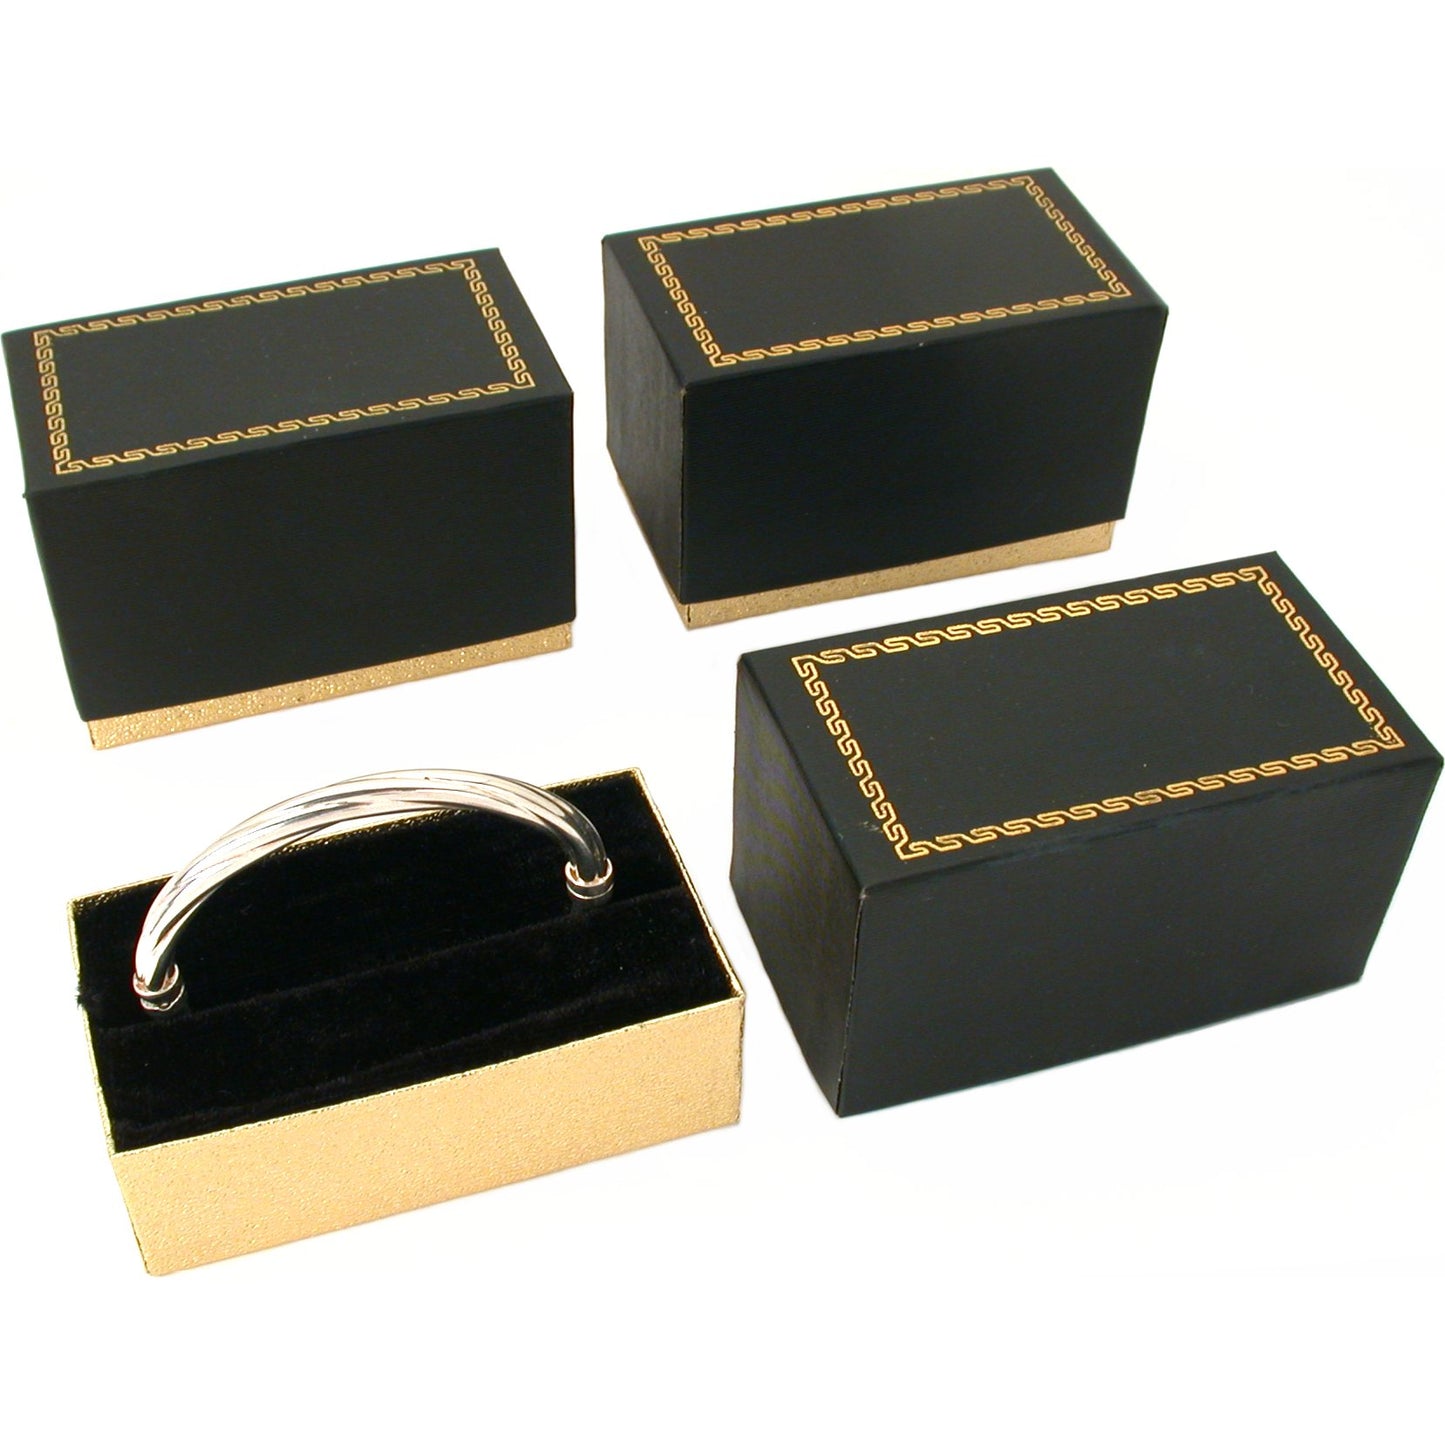 3 Bangle Bracelet Boxes Black & Gold Gift Display Boxes